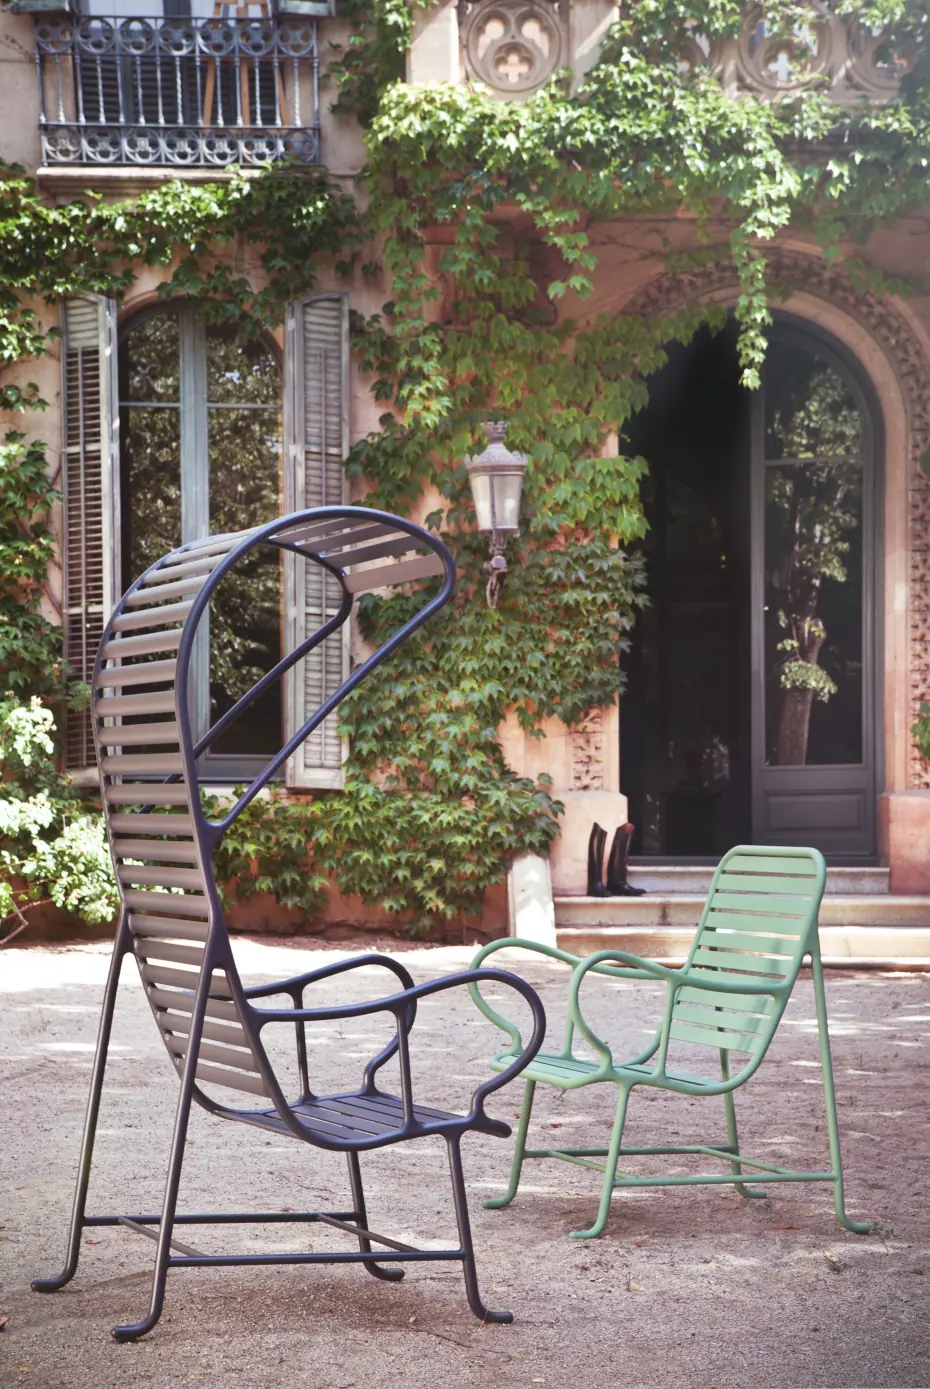 65857-65849-gardenias-armchair-with-pergola